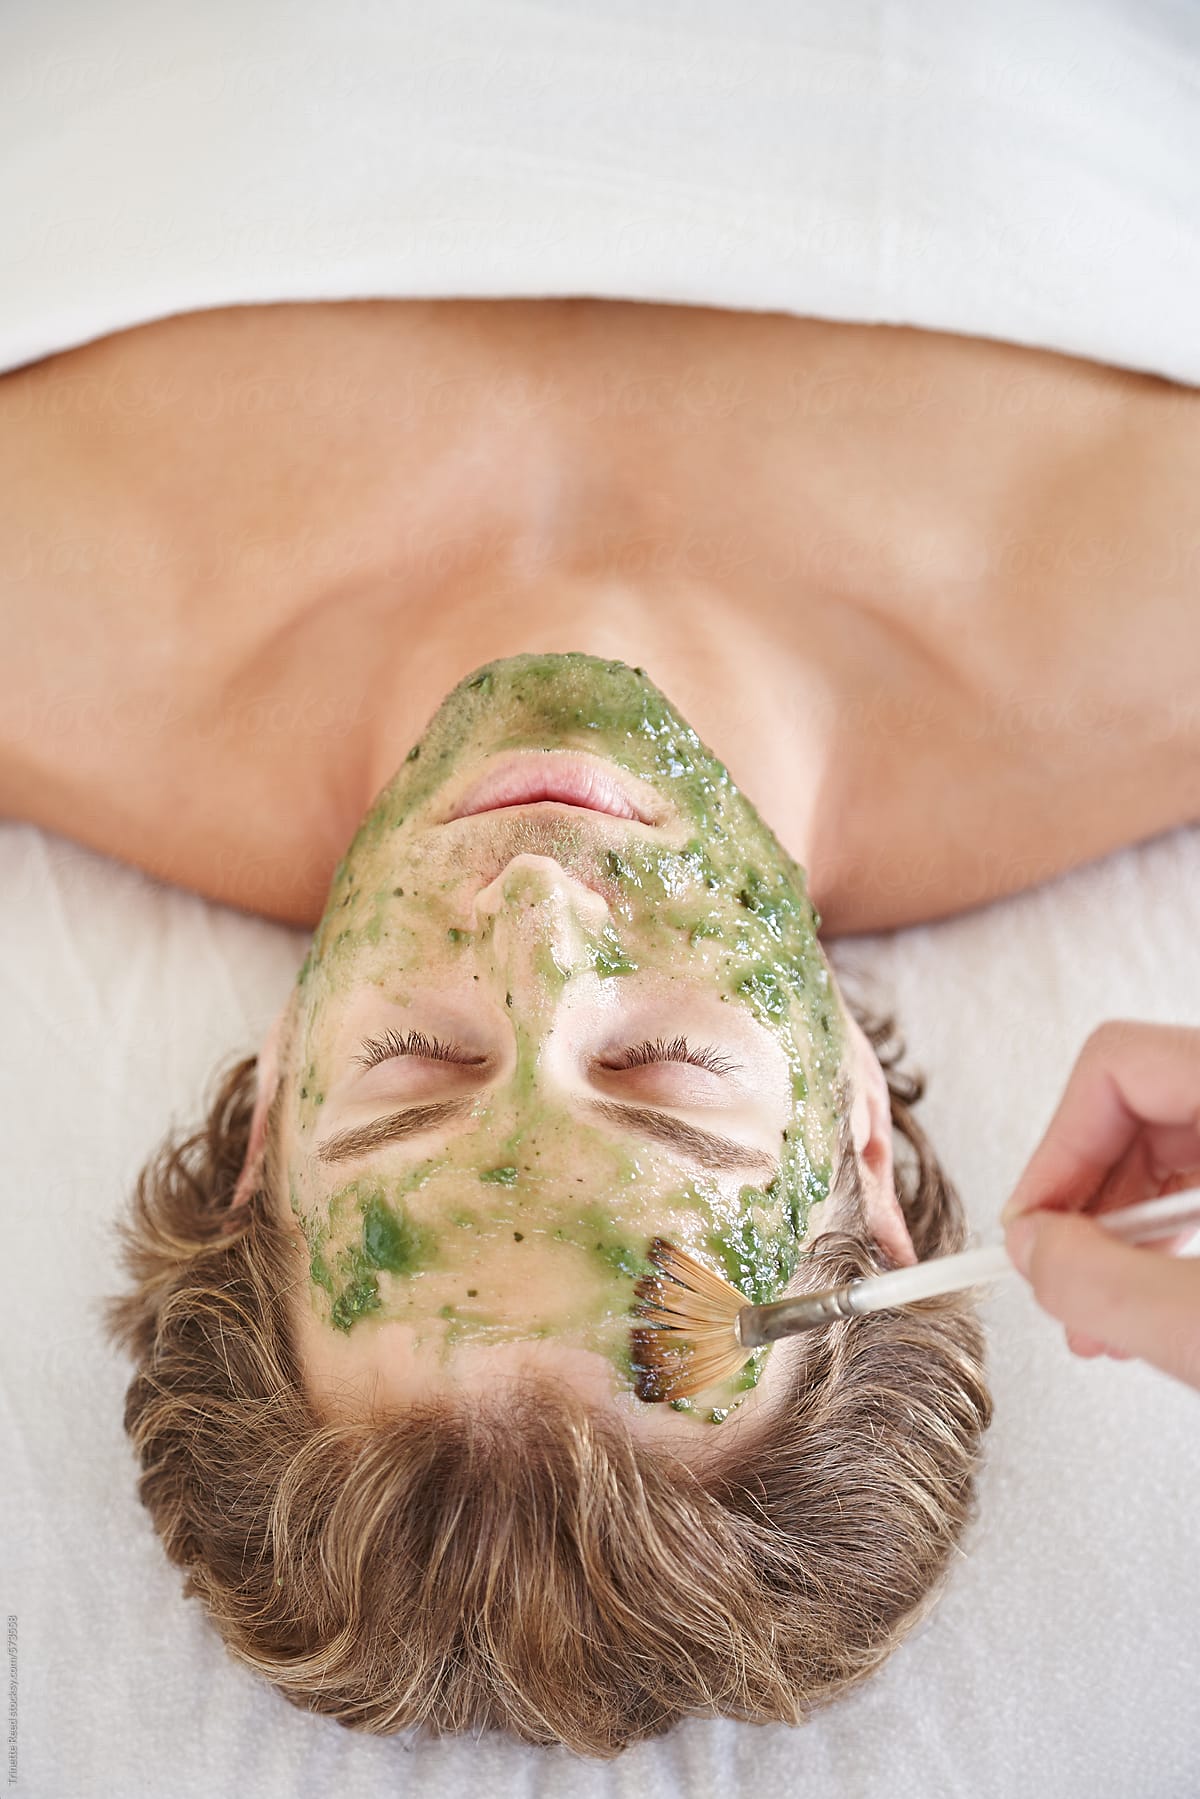 Man receiving all natural herbal facial at luxury spa